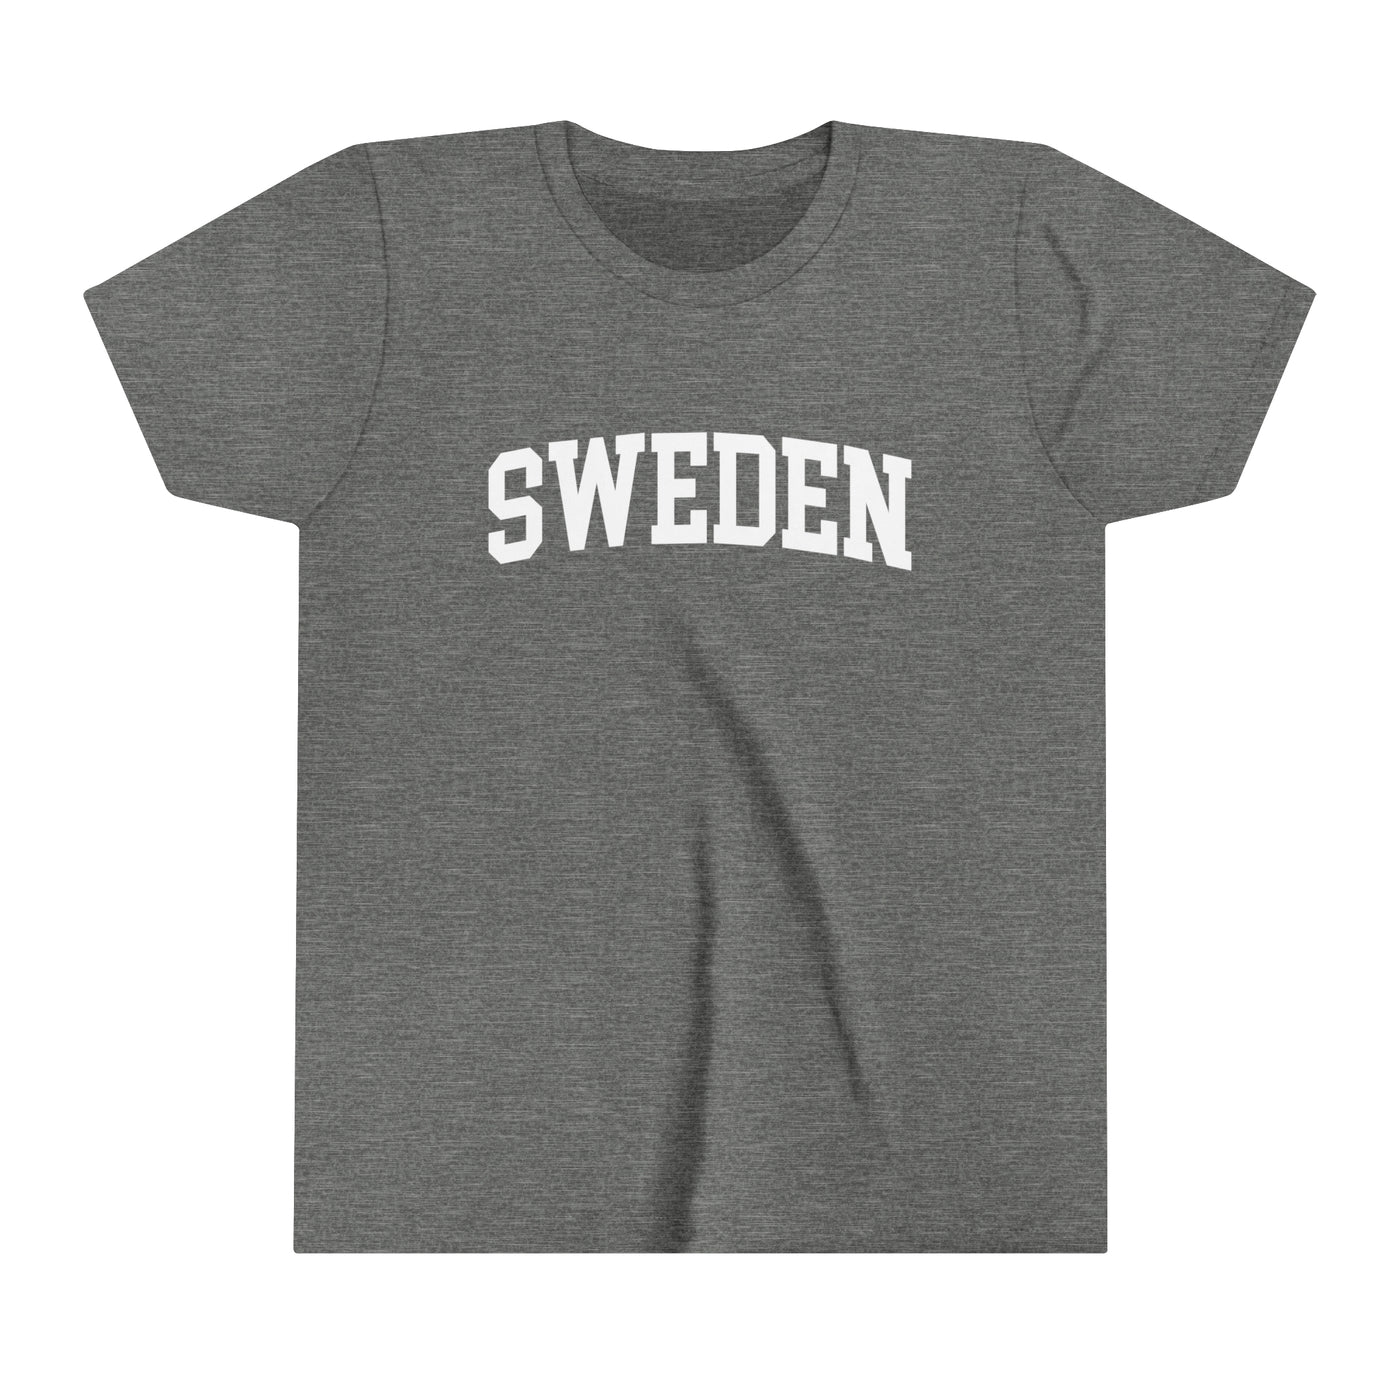 Sweden University Kids T-Shirt